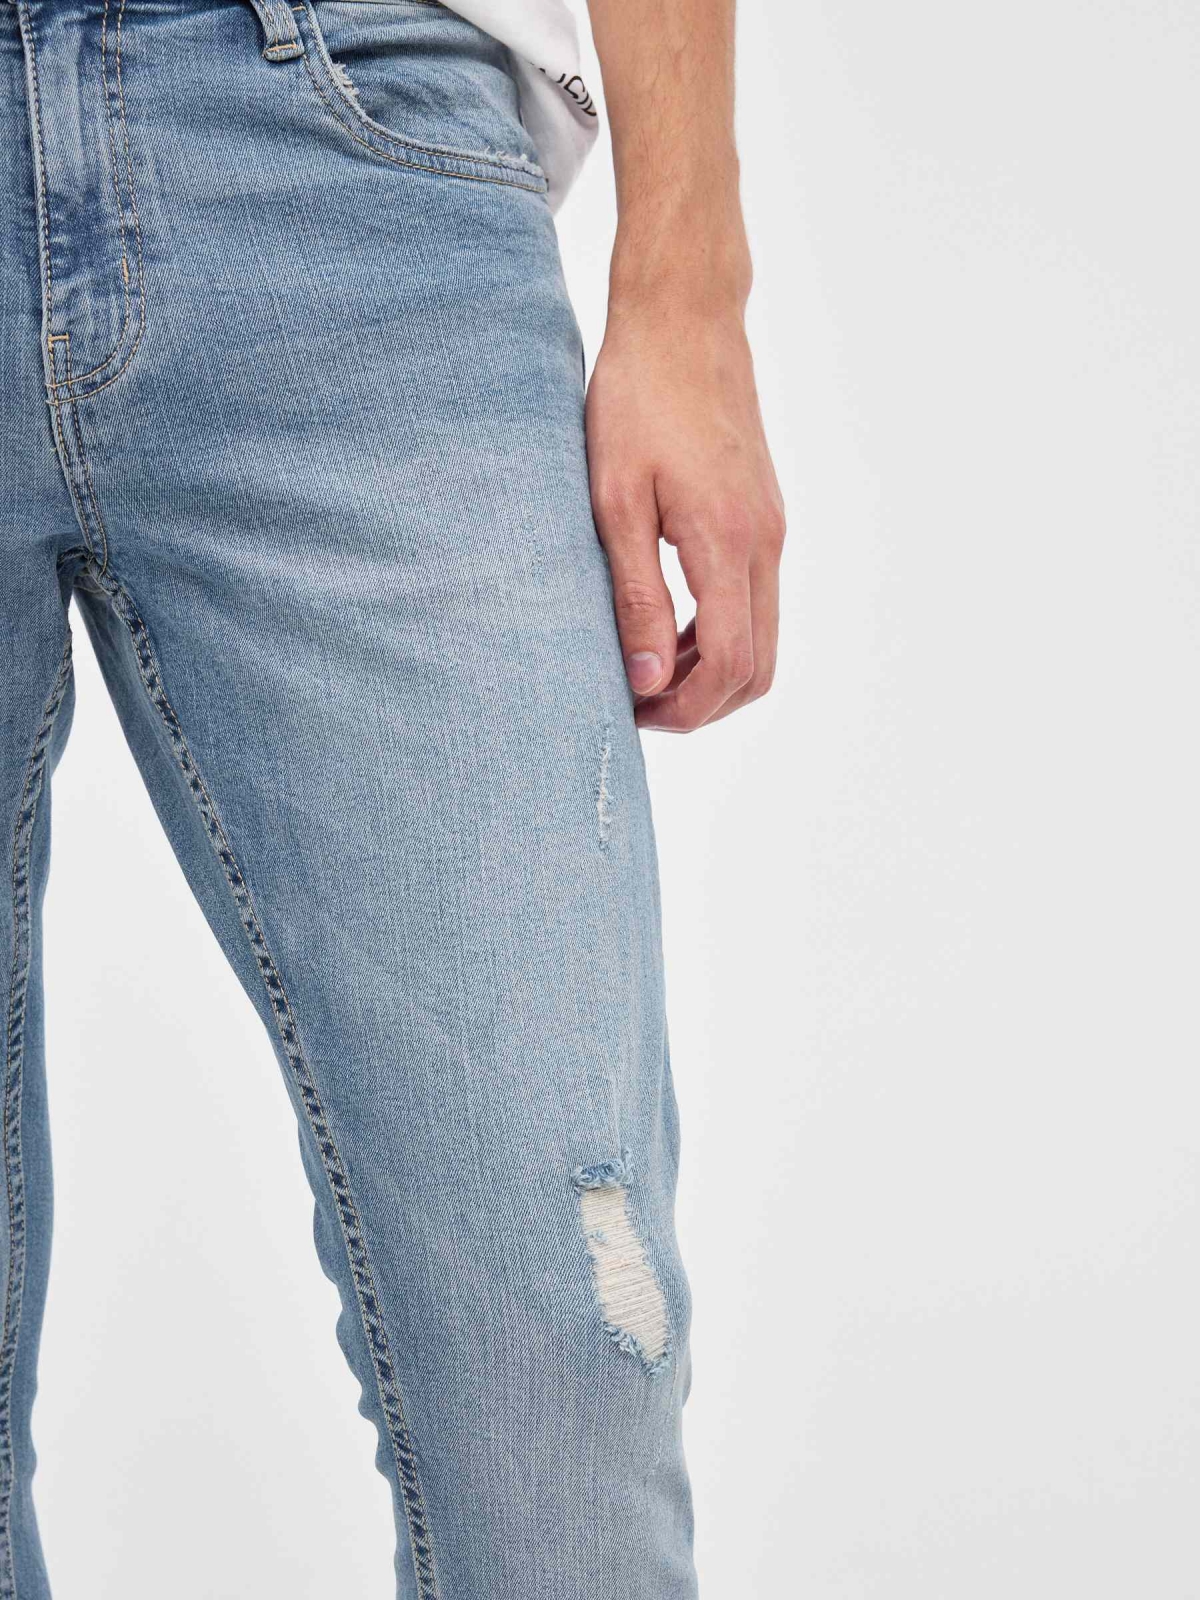 Ripped denim skinny jeans blue detail view